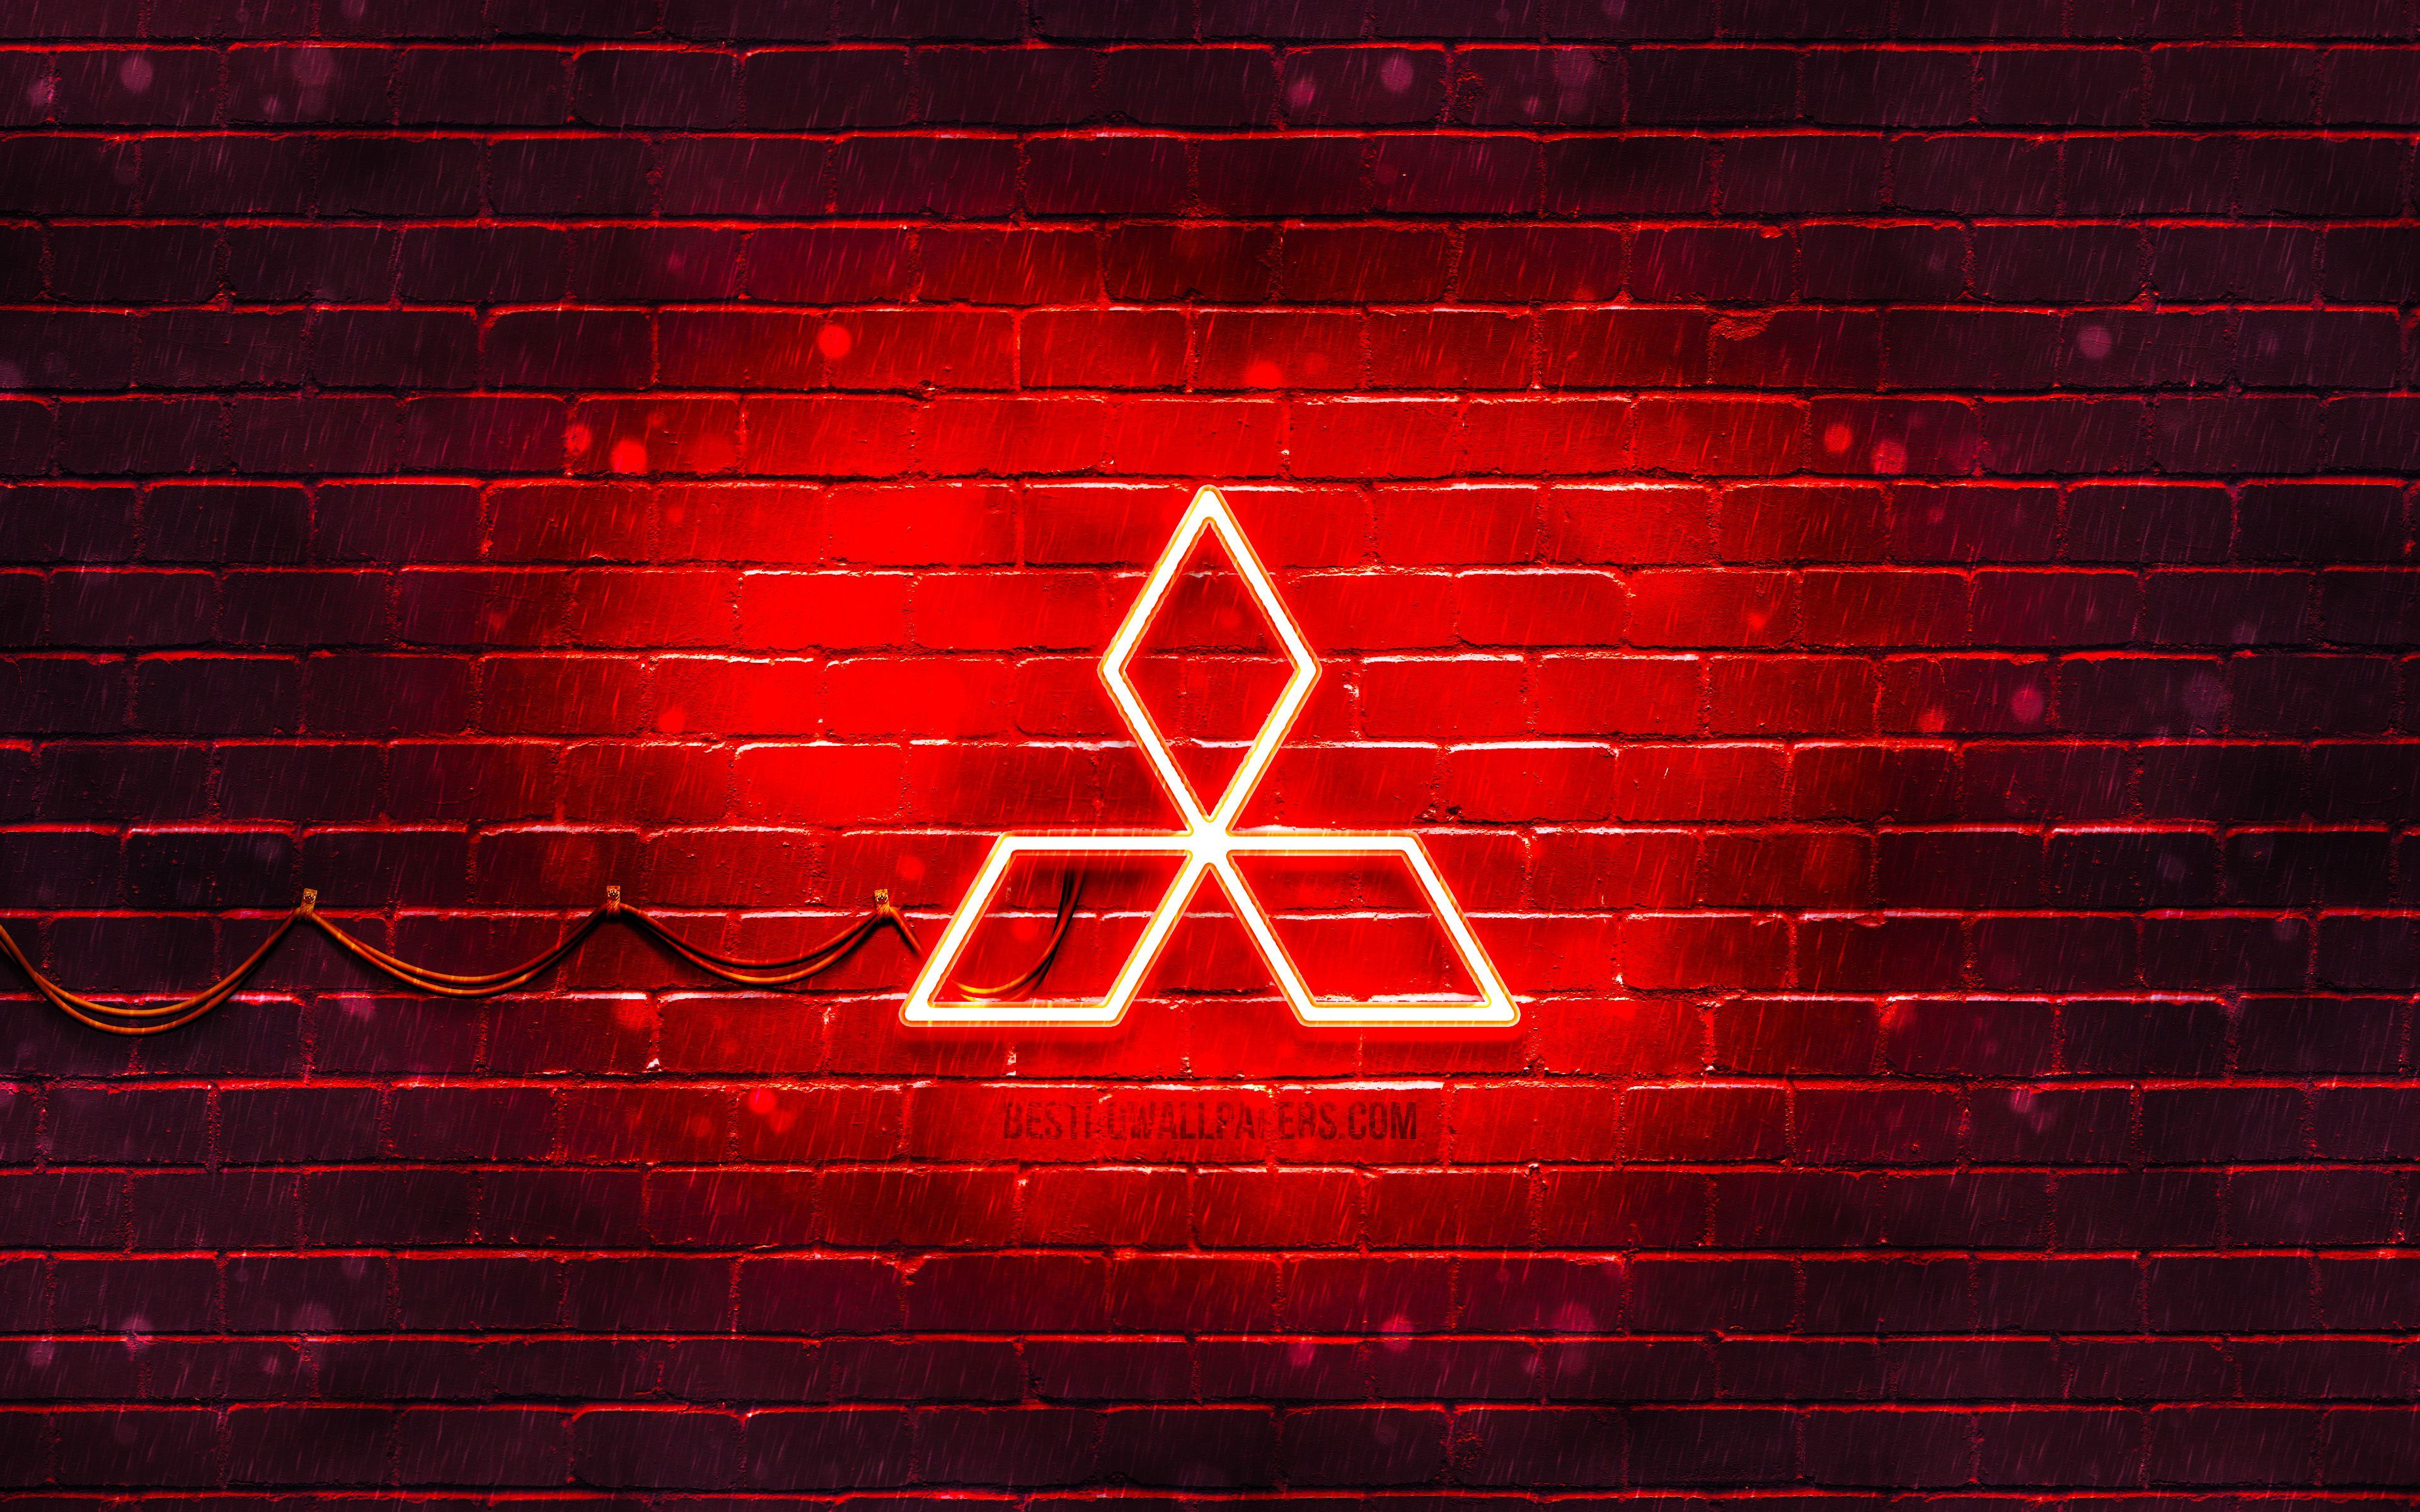 Mitsubishi red logo, 4k, red brickwall, Mitsubishi logo, cars brands, Mitsubishi neon logo, Mitsubishi. Neon logo, iPhone photo app, Red picture